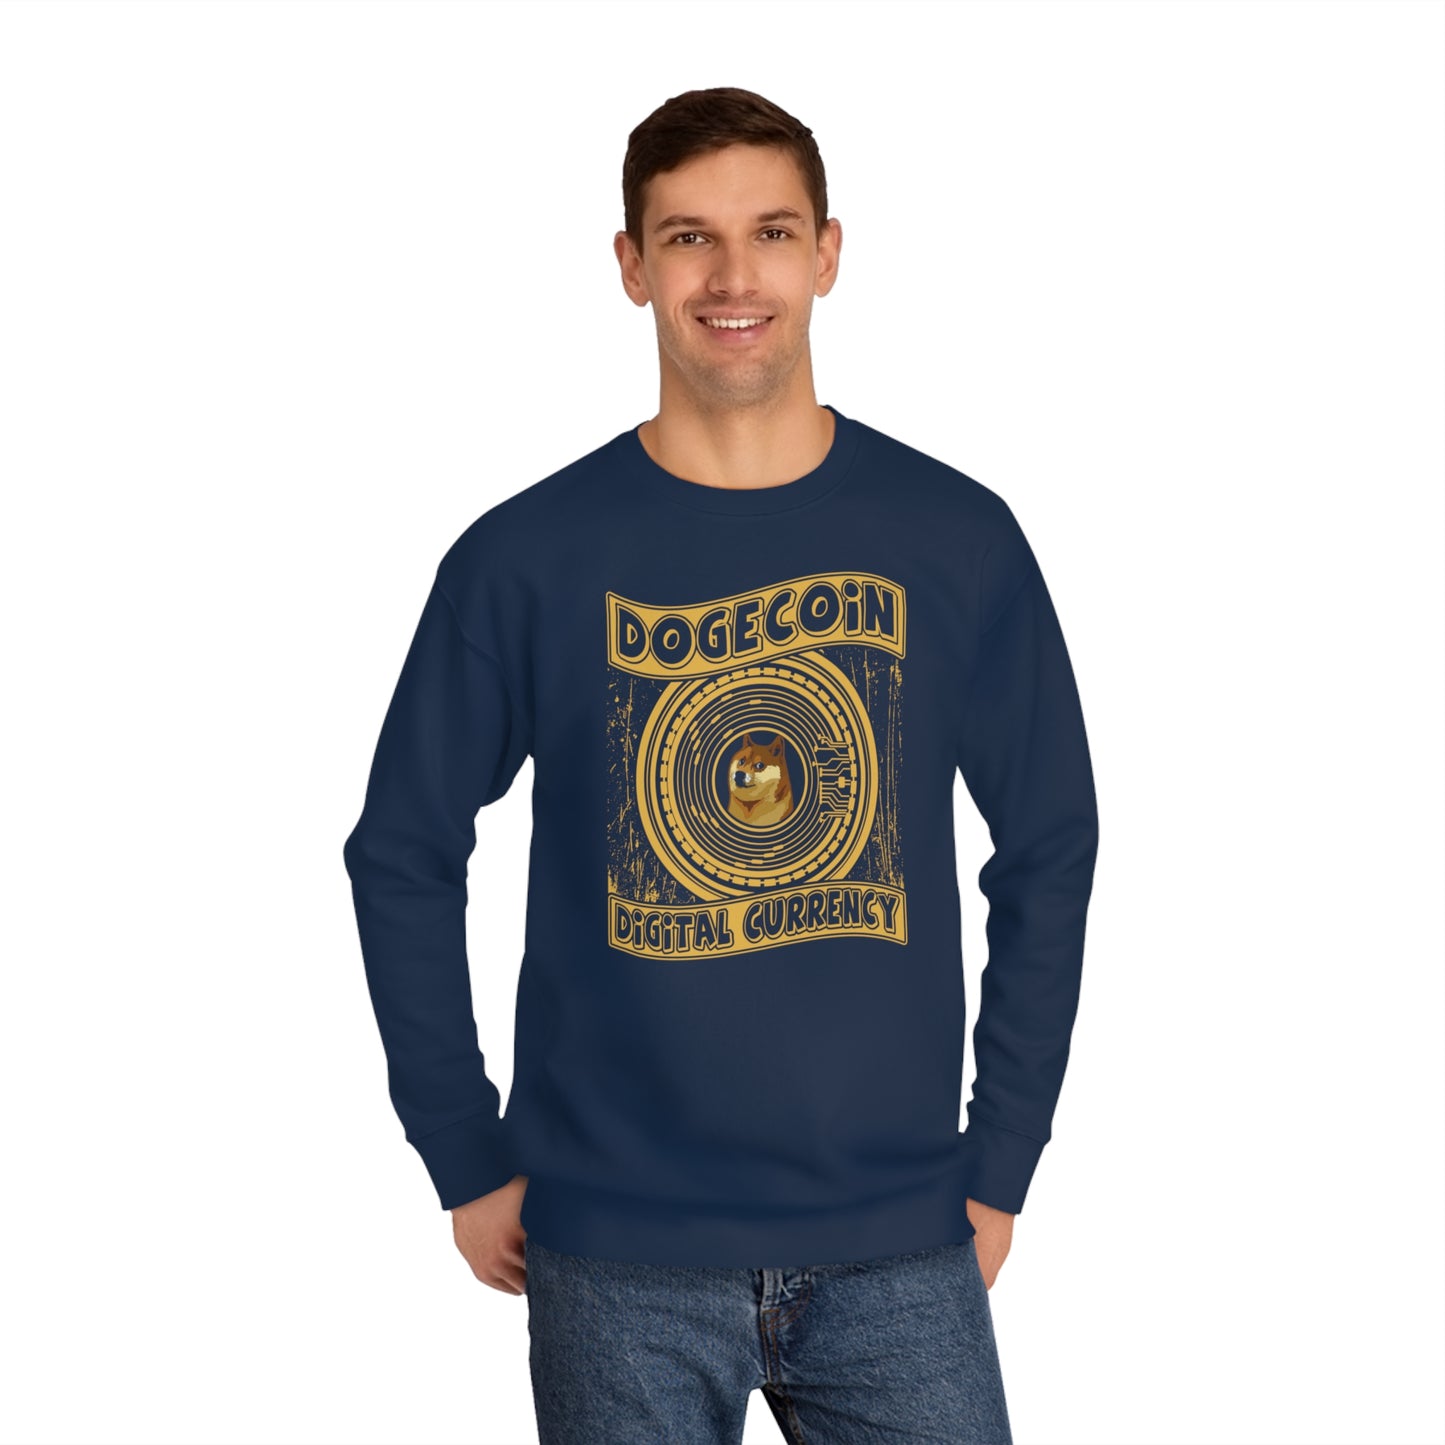 Unisex Crew Dogecoin Digital Currency Sweatshirt